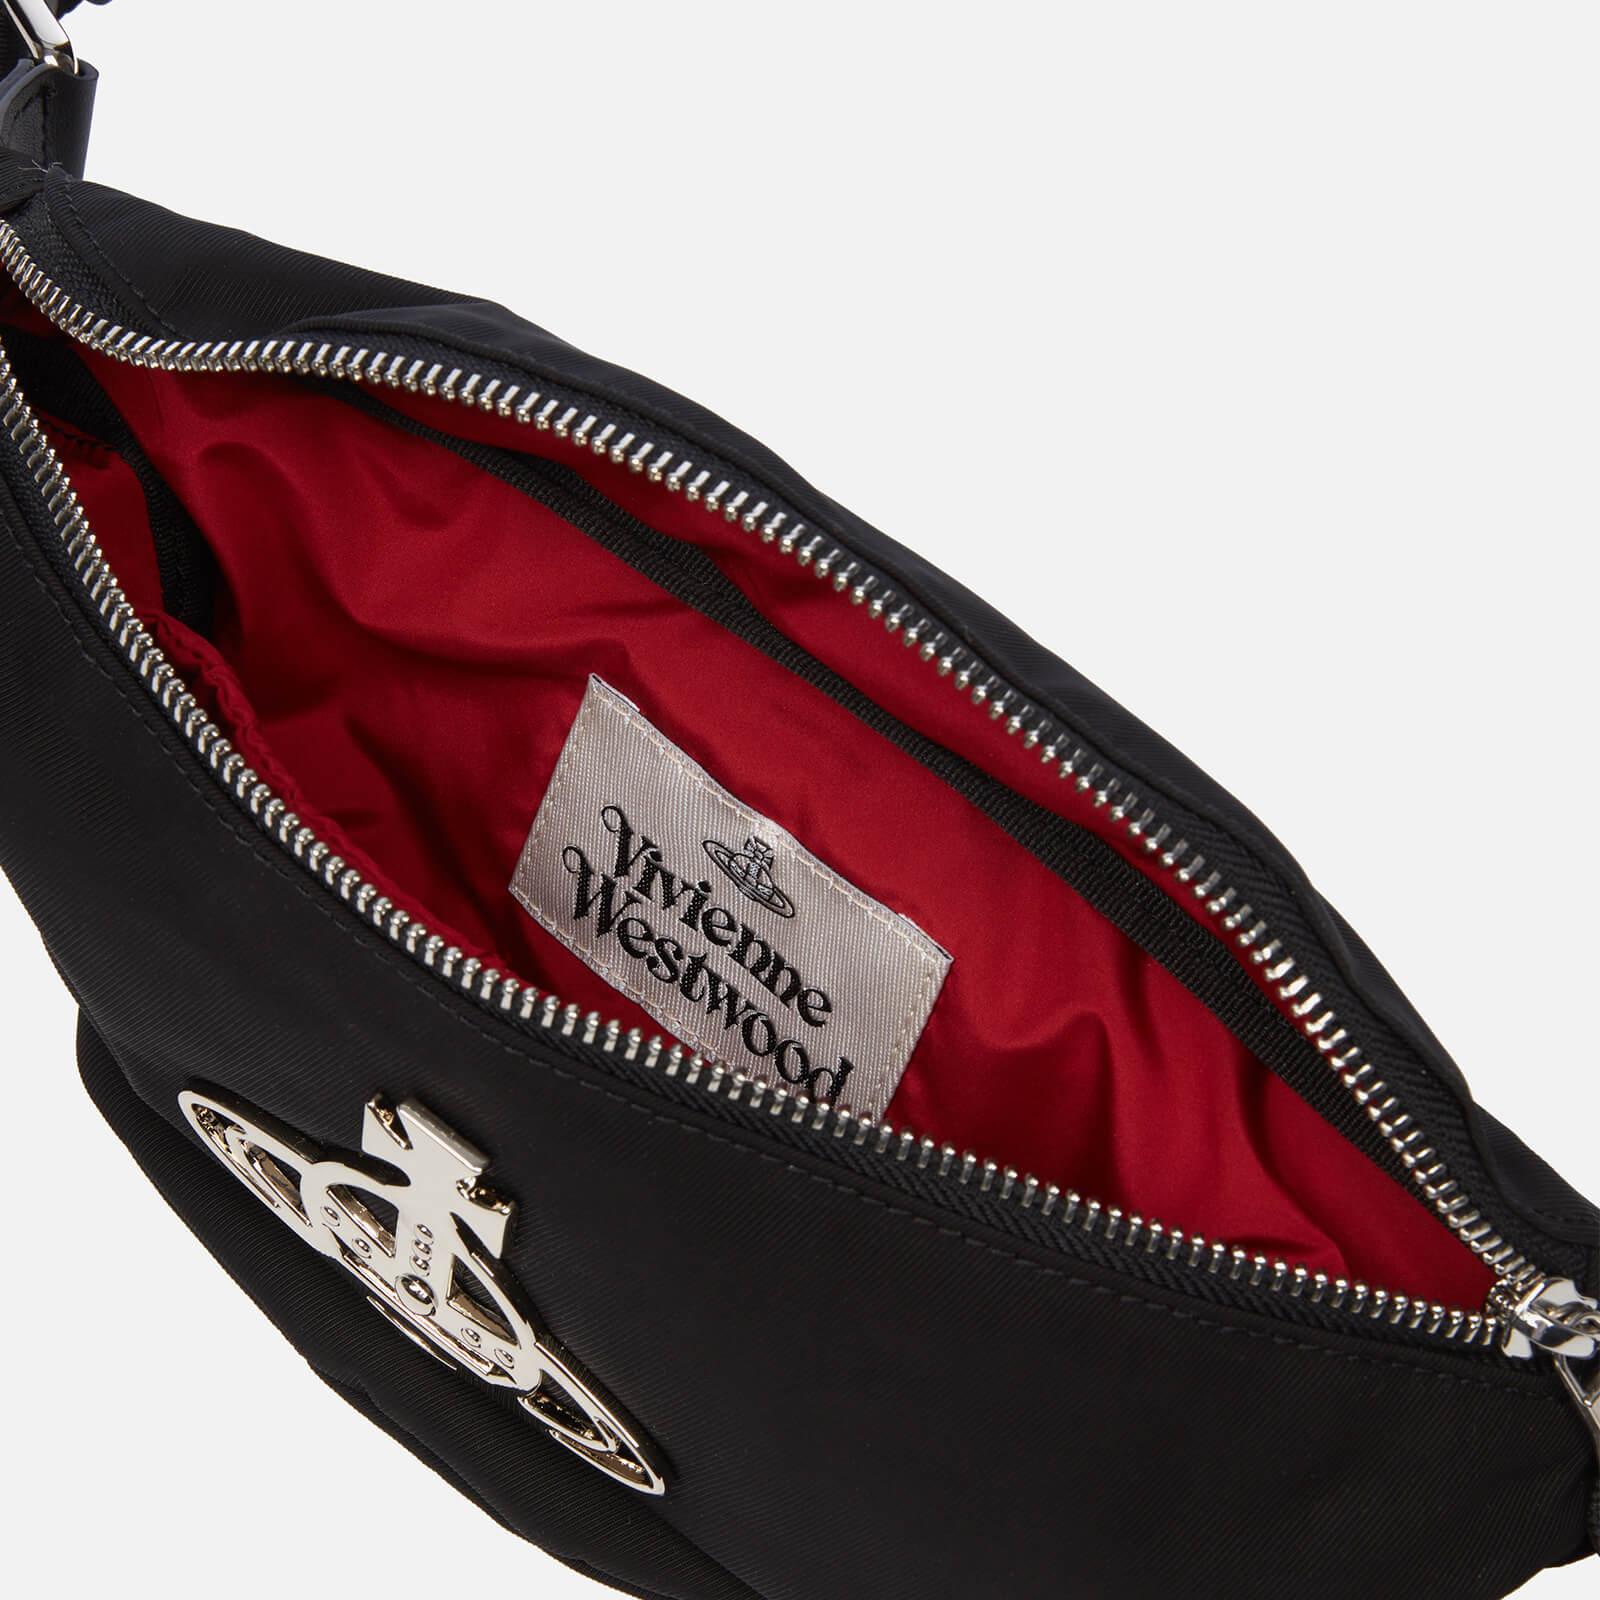 Vivienne Westwood Hilary Small Bum Bag in Black | Lyst